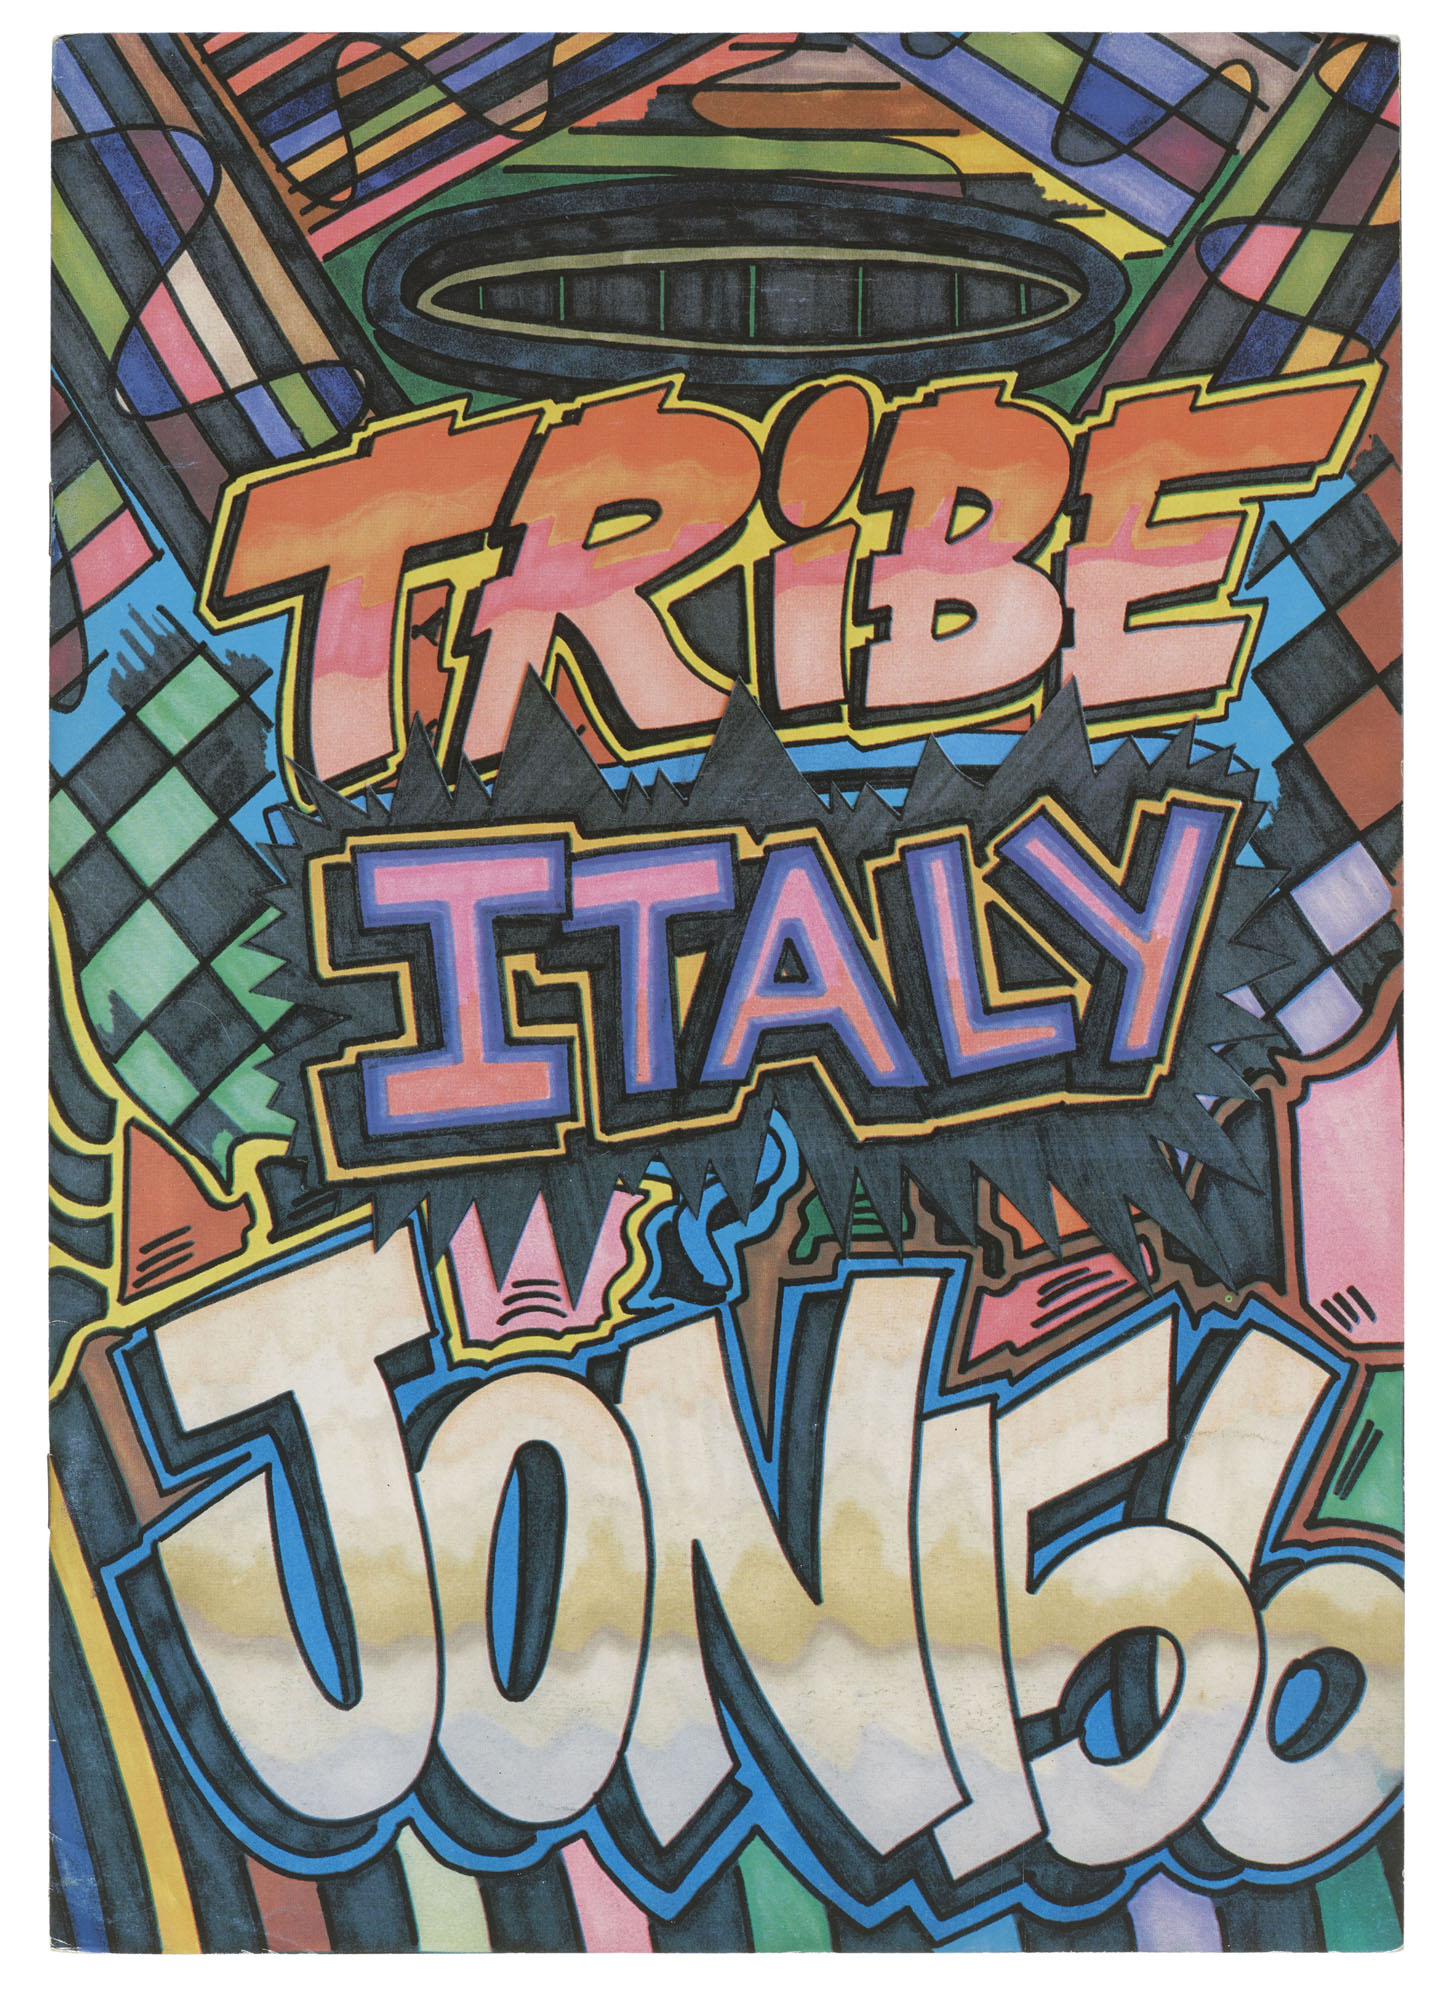 AdStar, Airone, and KayOne Mantovani (creators), JonOne / John Andrew Perello (cover artist), Hip Hop Tribe (Tribe), no. 7, 1994, offset, Milan